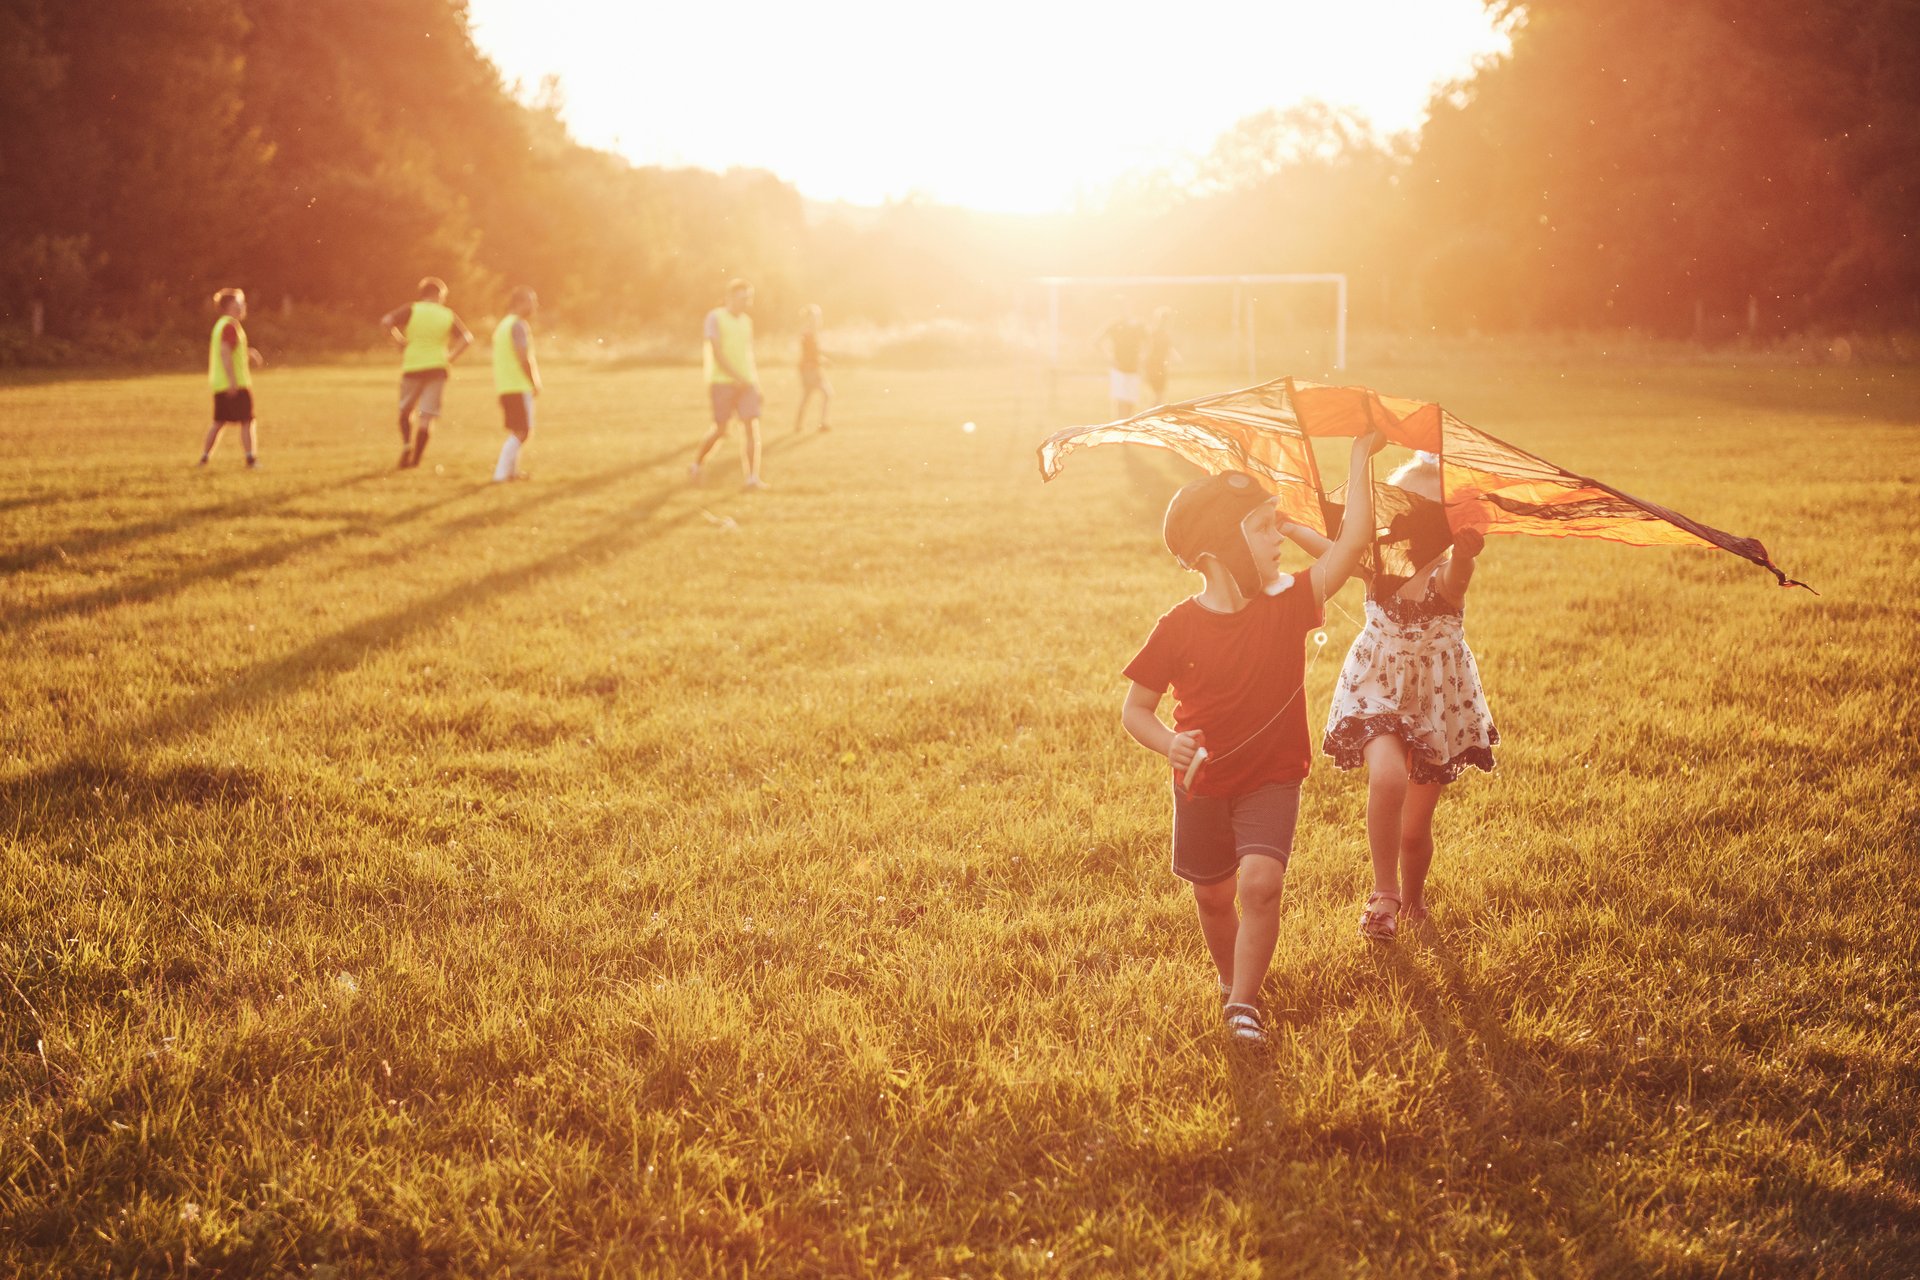 happy-children-launch-kite-field-sunset-little-boy-girl-summer-vacation